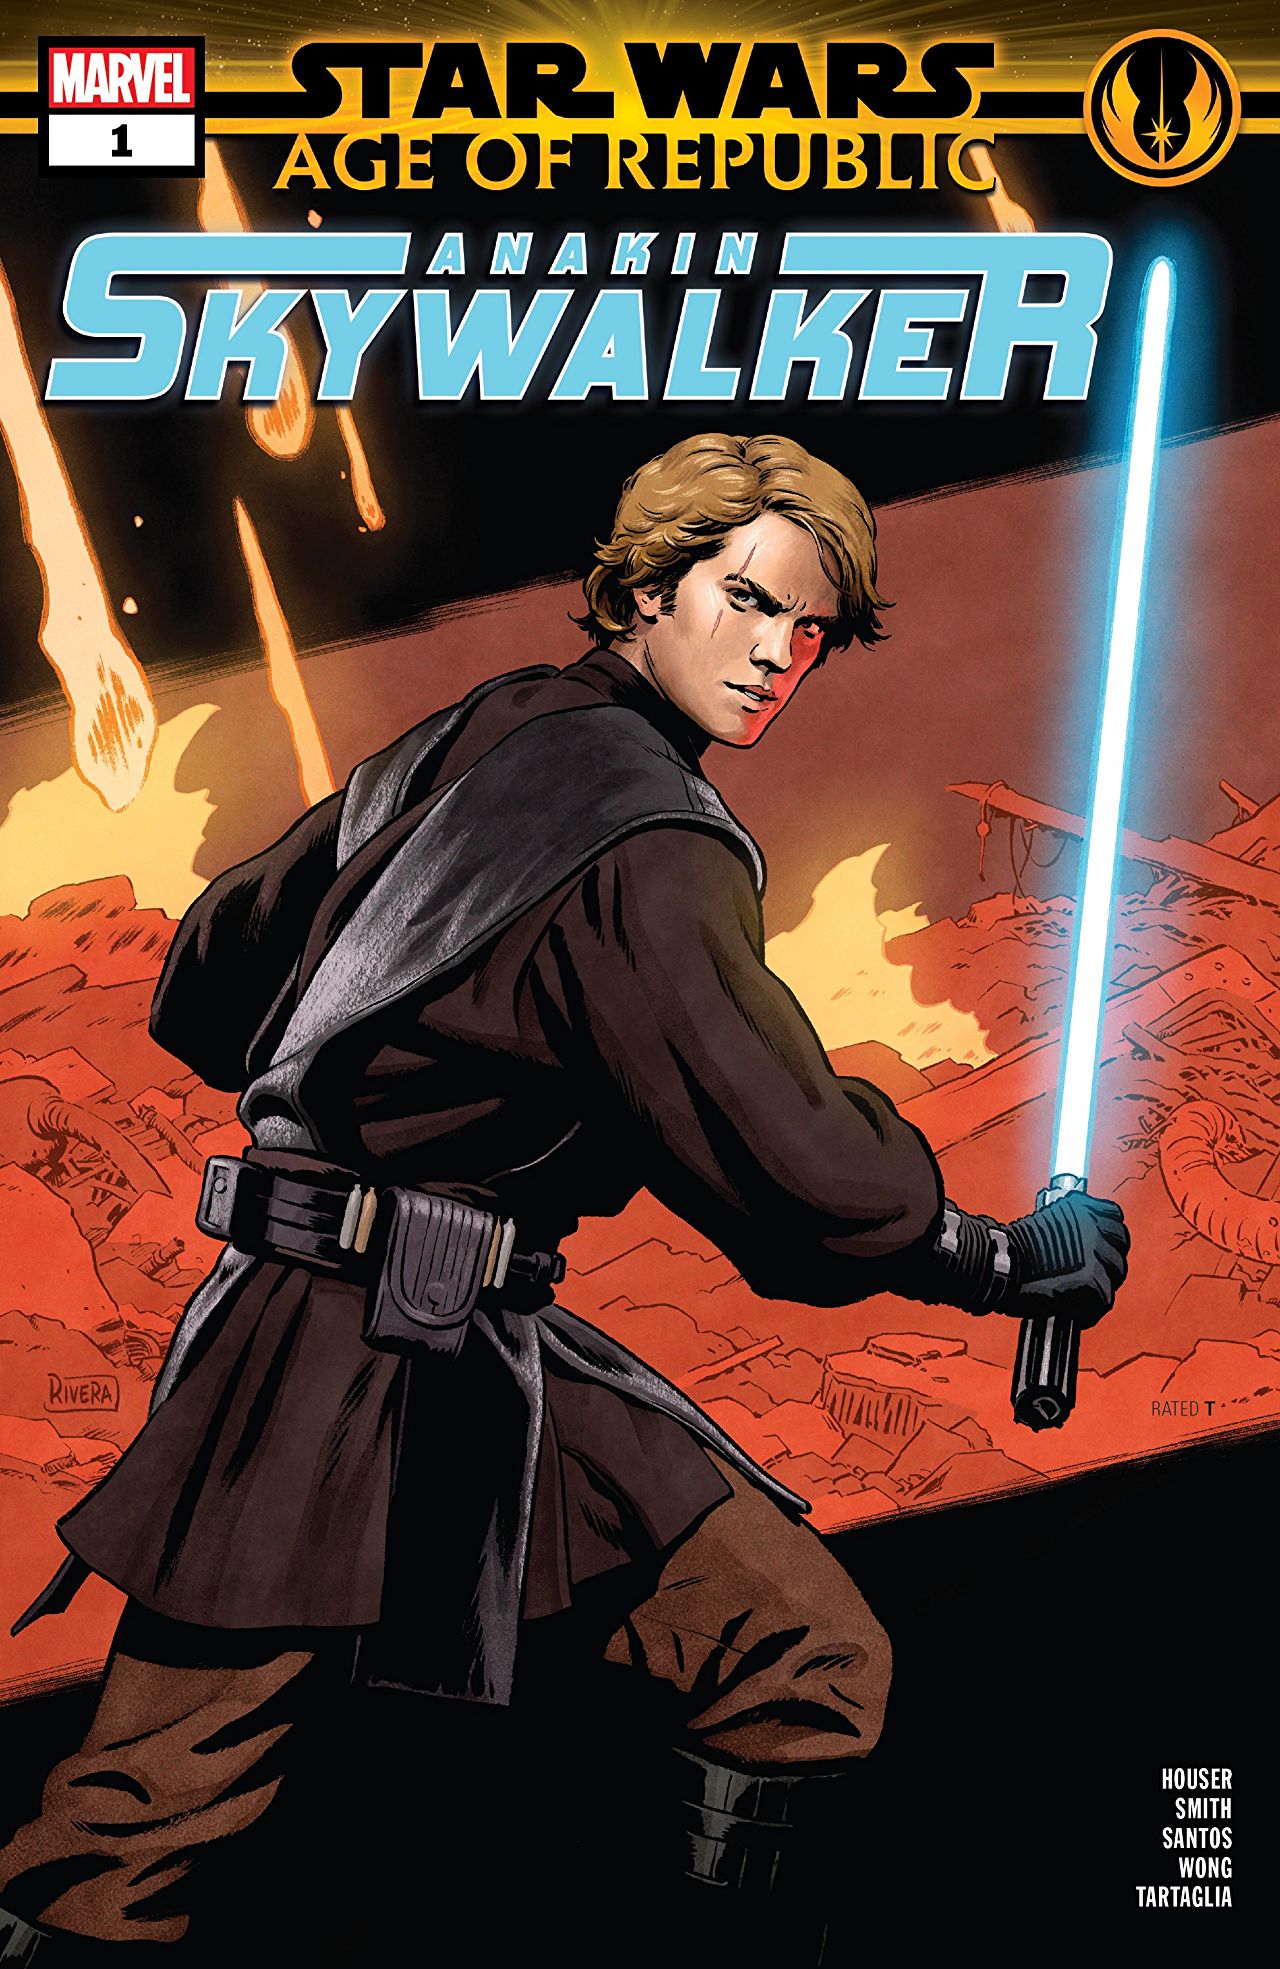 Star Wars Age of the Republic - Anakin Skywalker